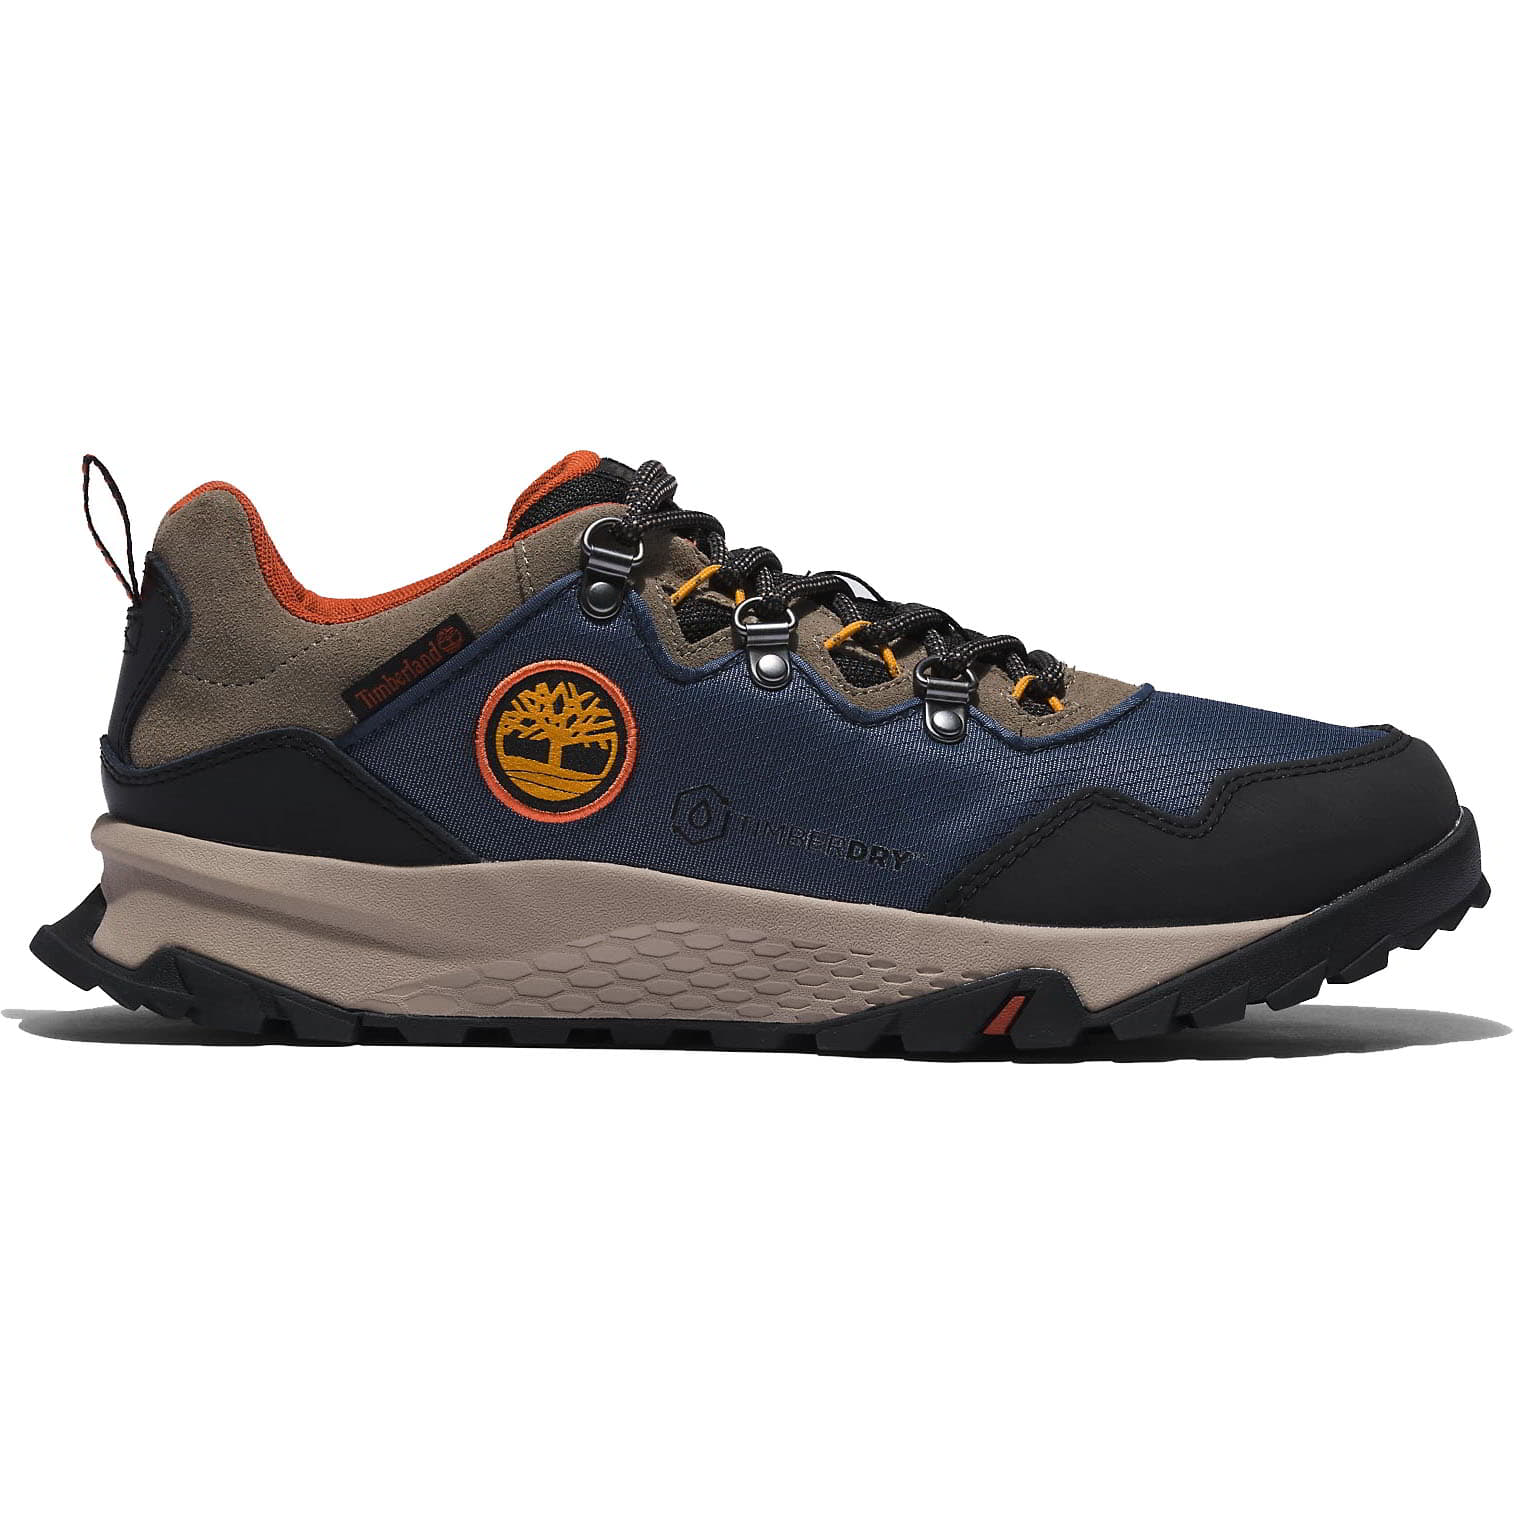 Timberland Mens A2DZZ Lincoln Peak Low Waterproof Walking Hiking Shoes - UK 10 Blue 2951